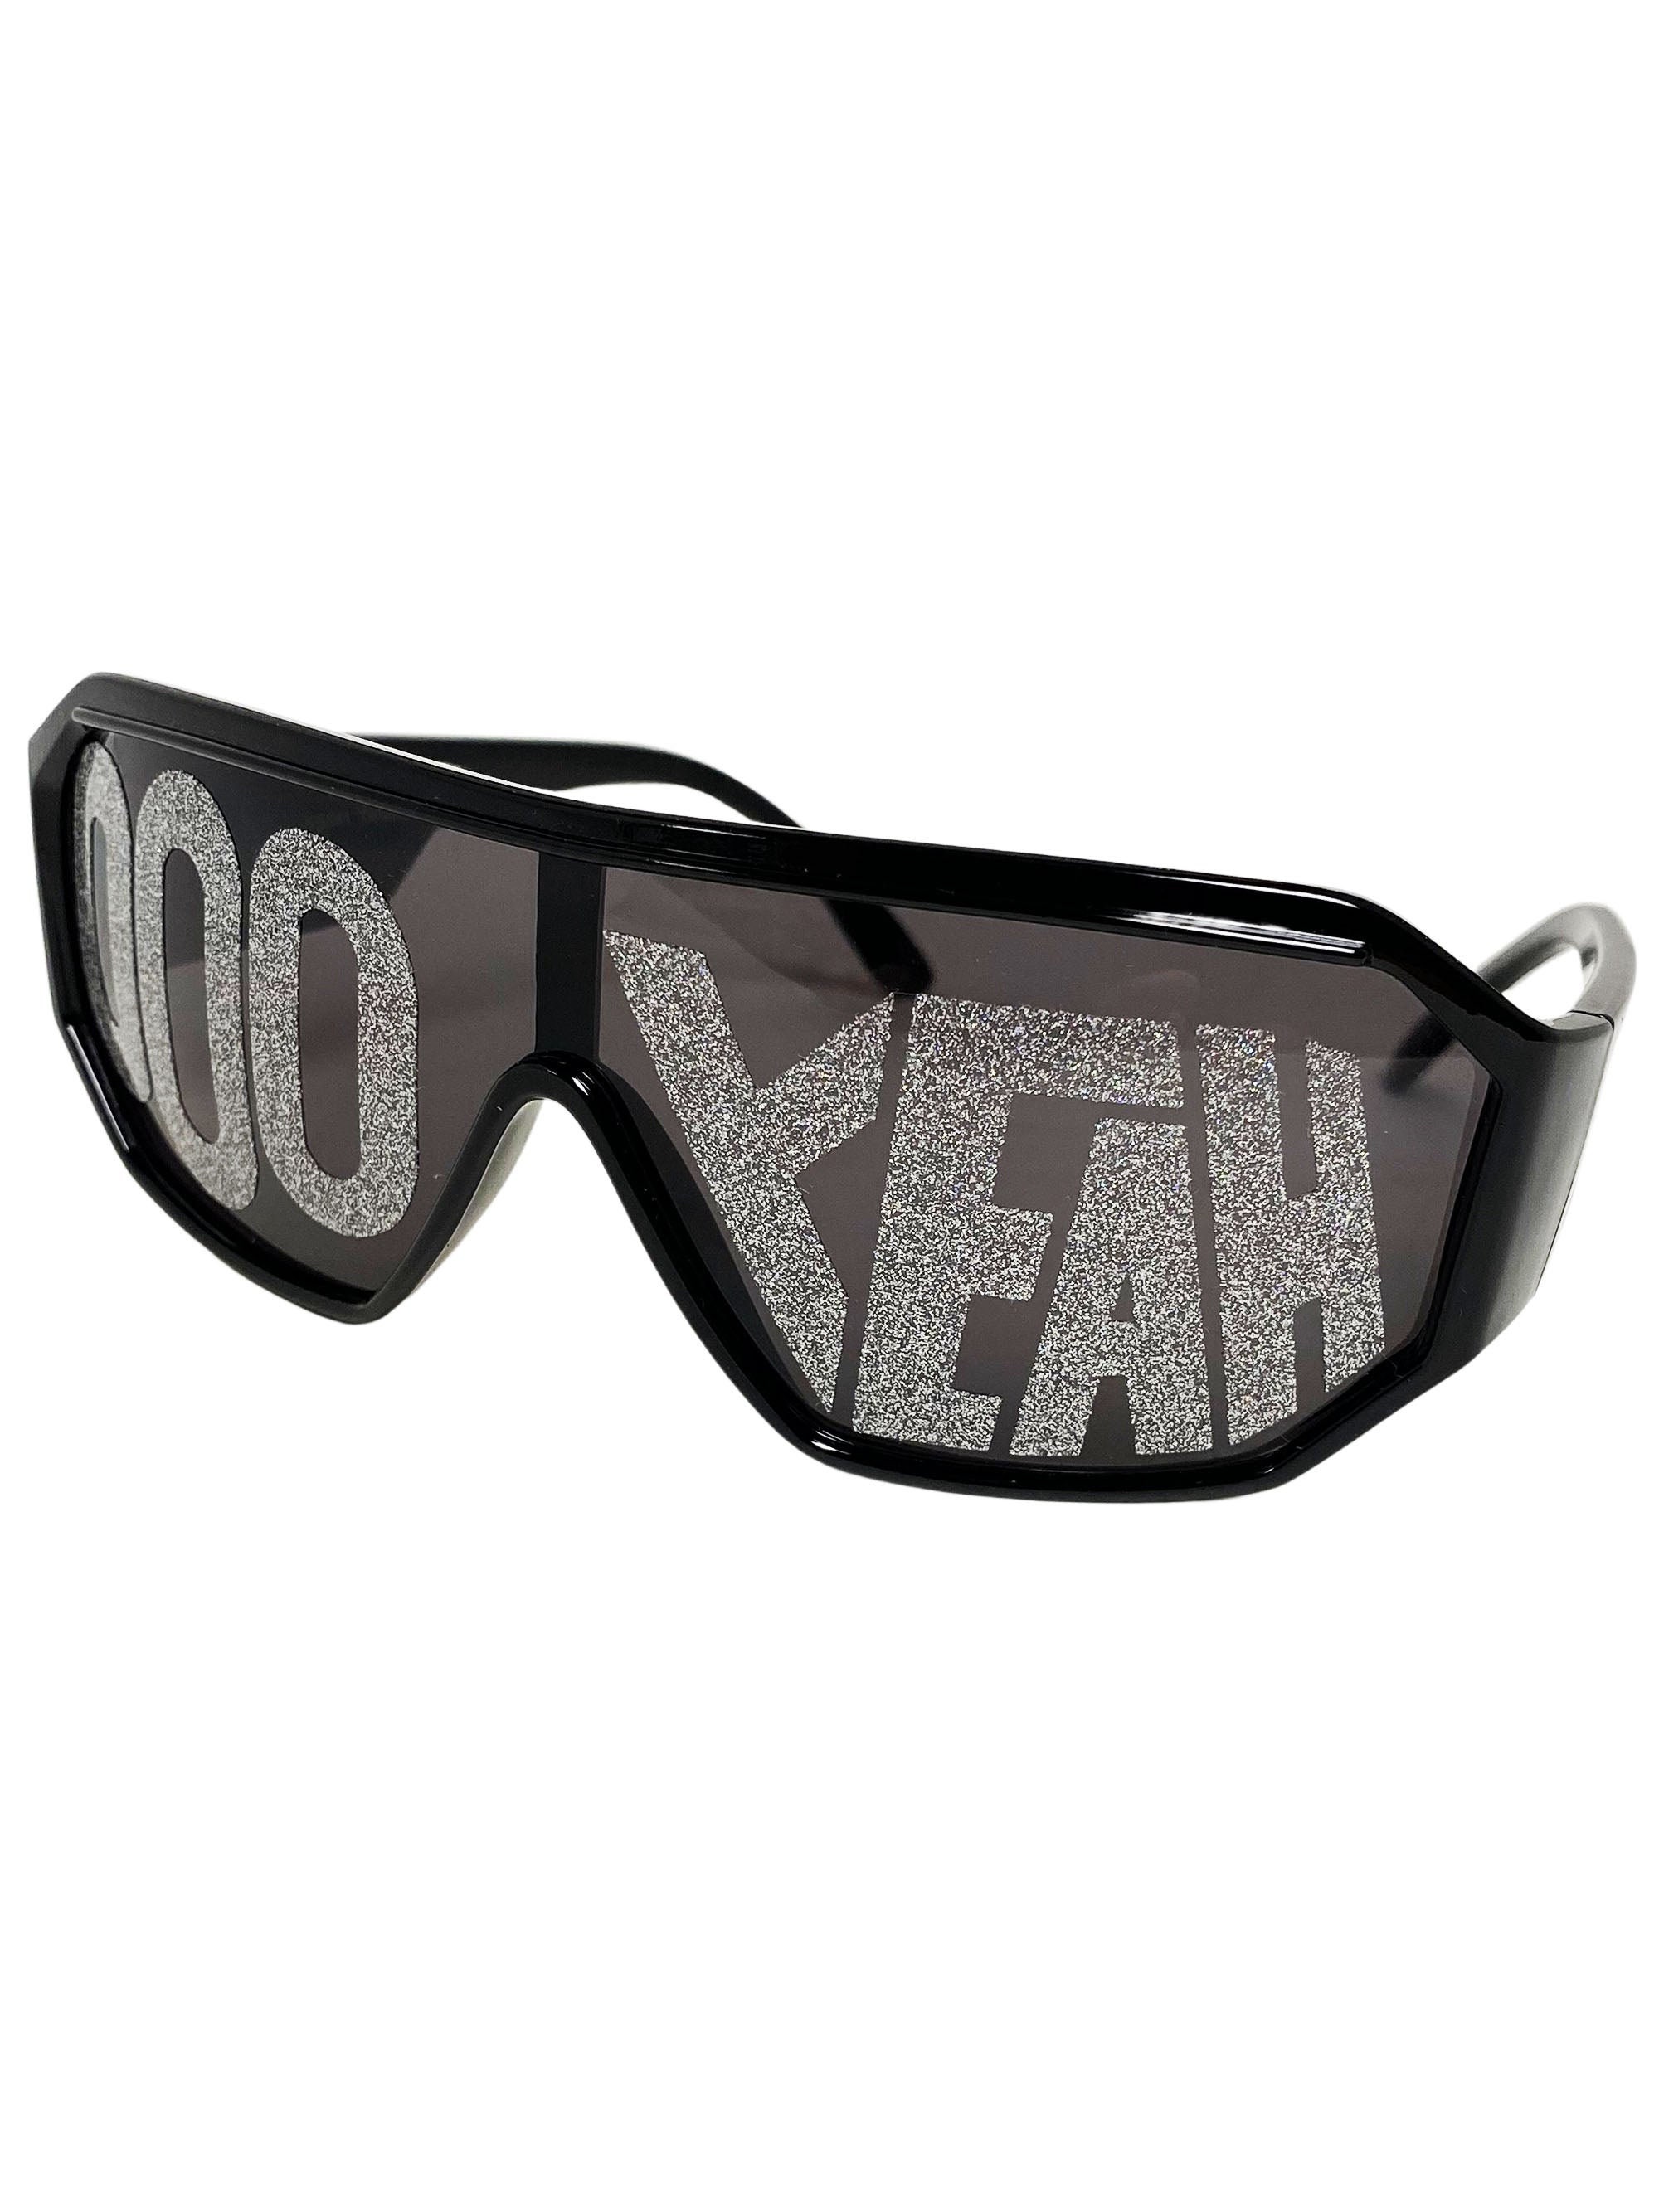 Macho Wrestler Sunglasses Silver OOO Yeah on Black Lens with Black Frame